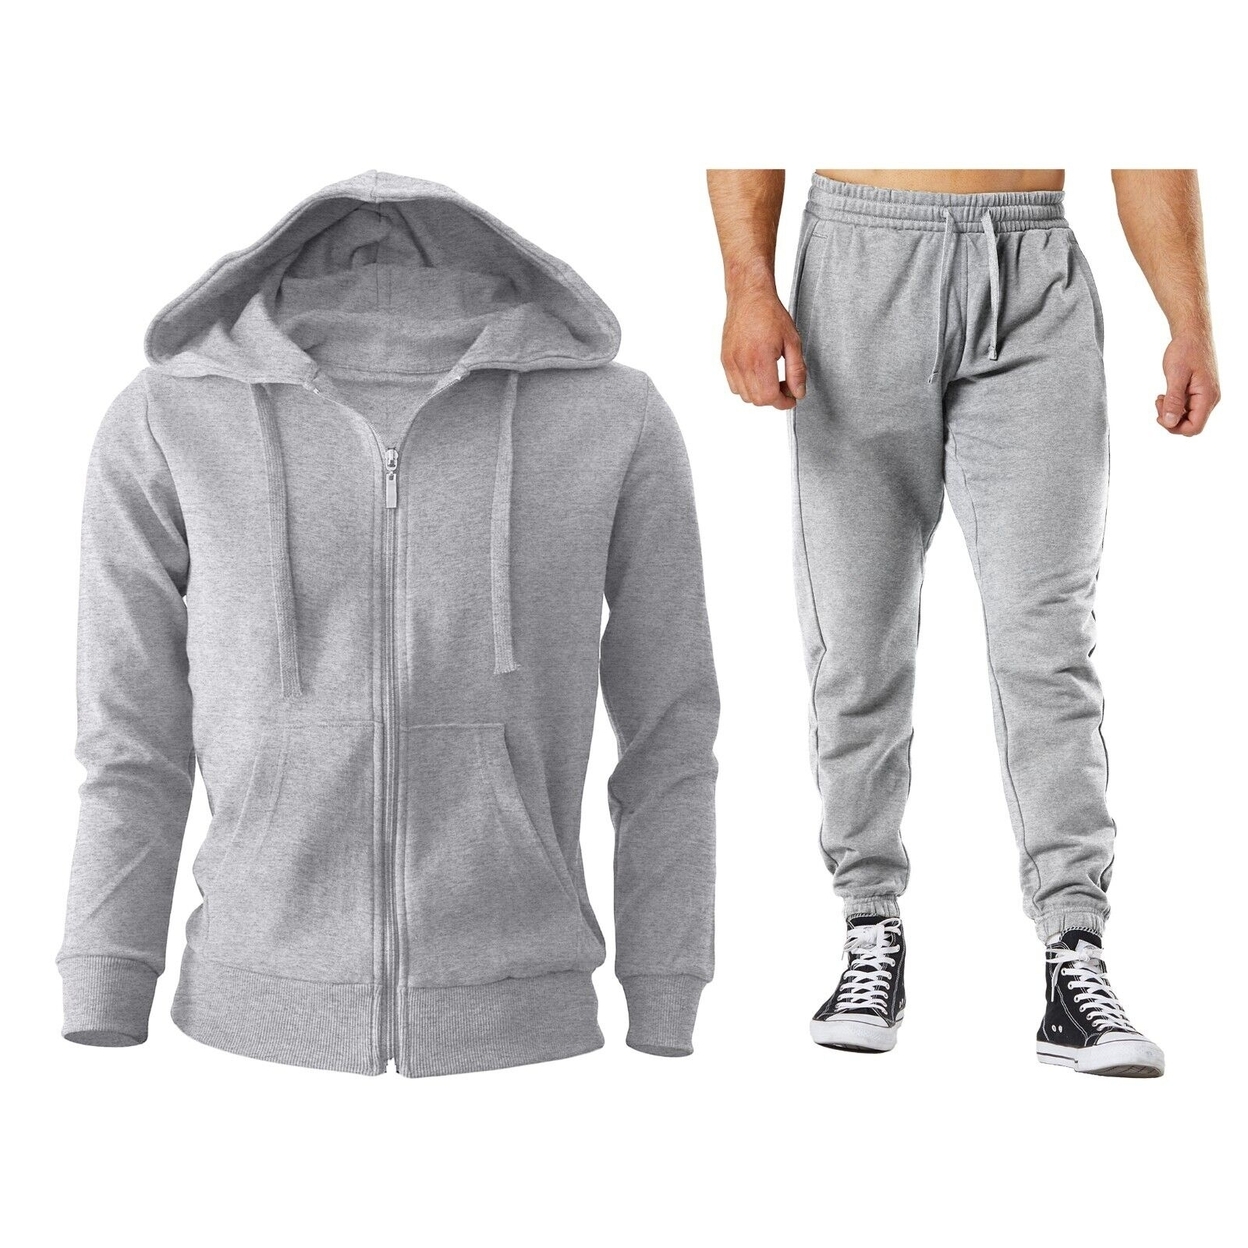 2-Piece: Men's Winter Warm Cozy Athletic Multi-Pockets BIG & TALL Sweatsuit Set - Grey, Small